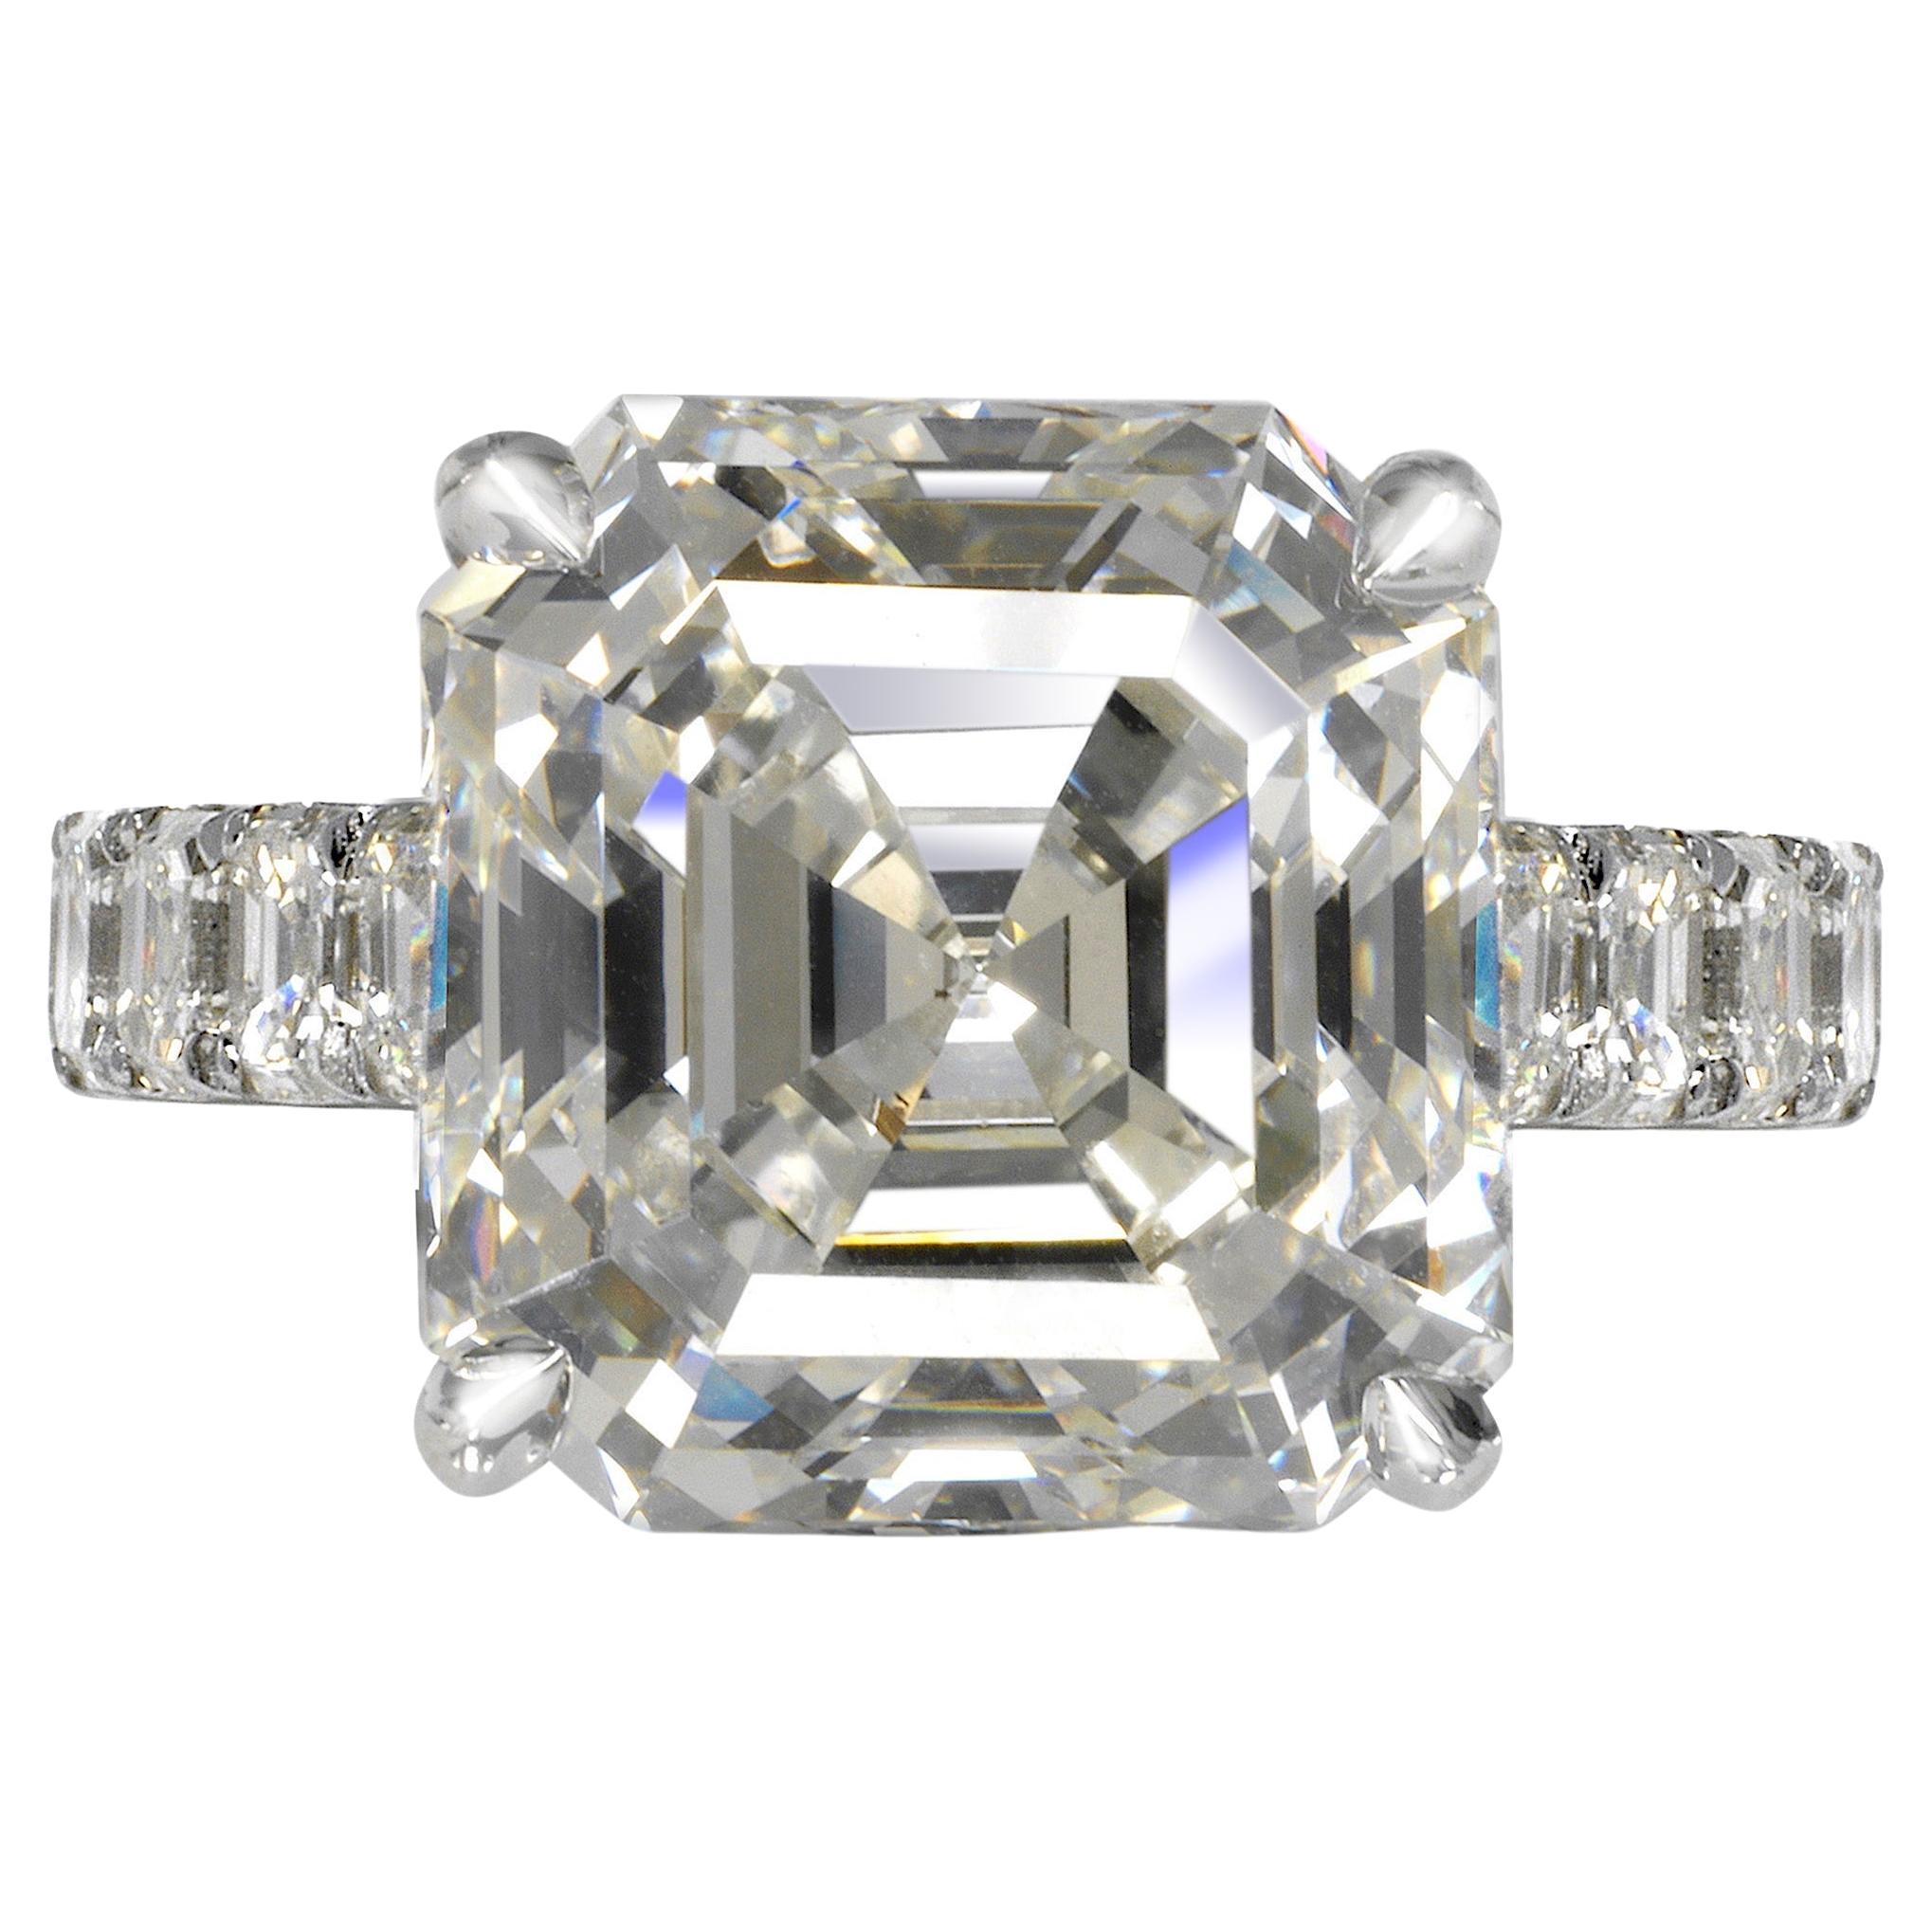 12 Carat Asscher Cut Diamond Engagement Ring GIA Certified J VS2 For Sale